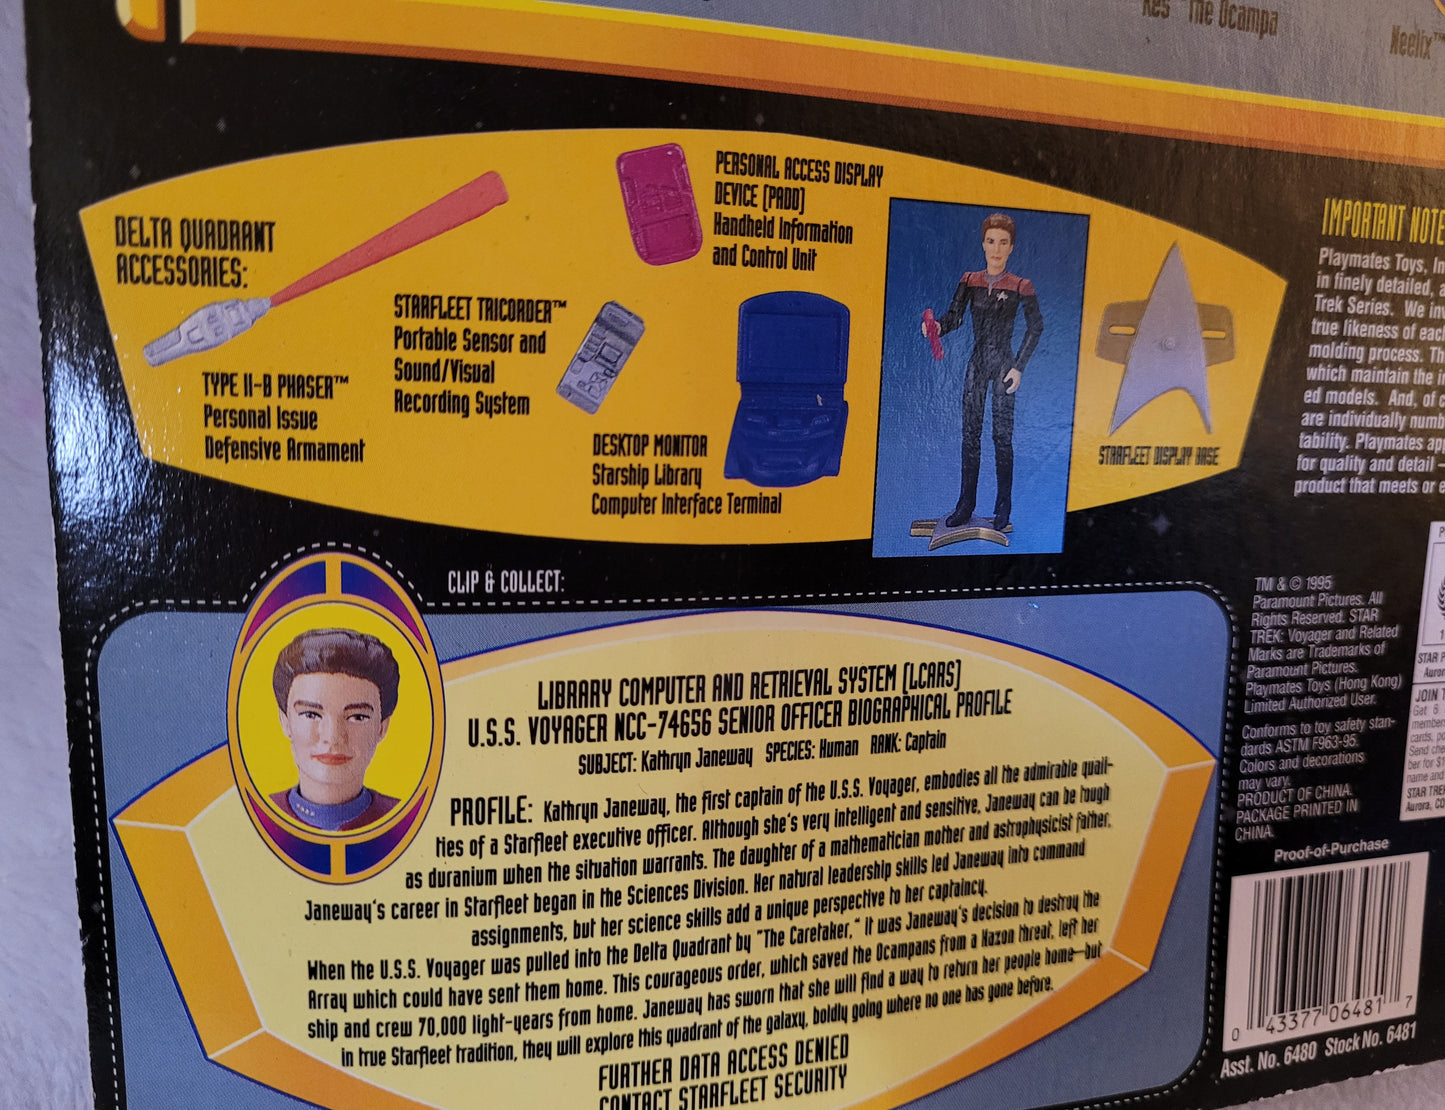 Star Trek Voyager: Captain Janeway Action Figure